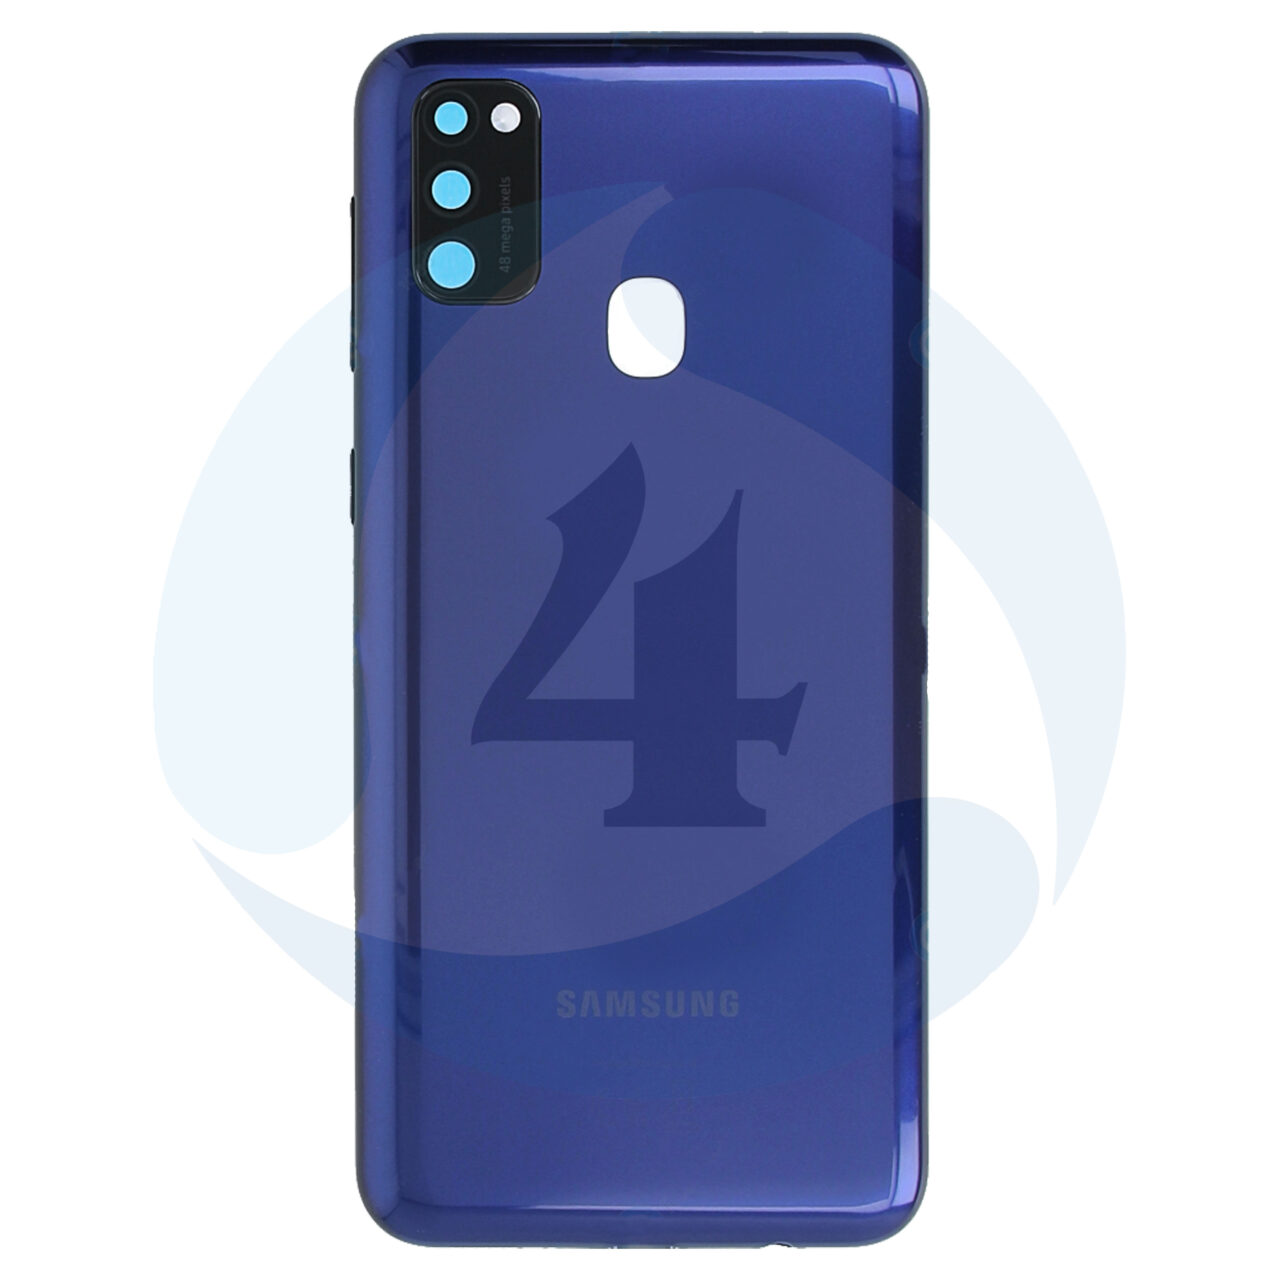 Samsung galaxy m21 sm m215f M307f M30 S battery cover midnight blue